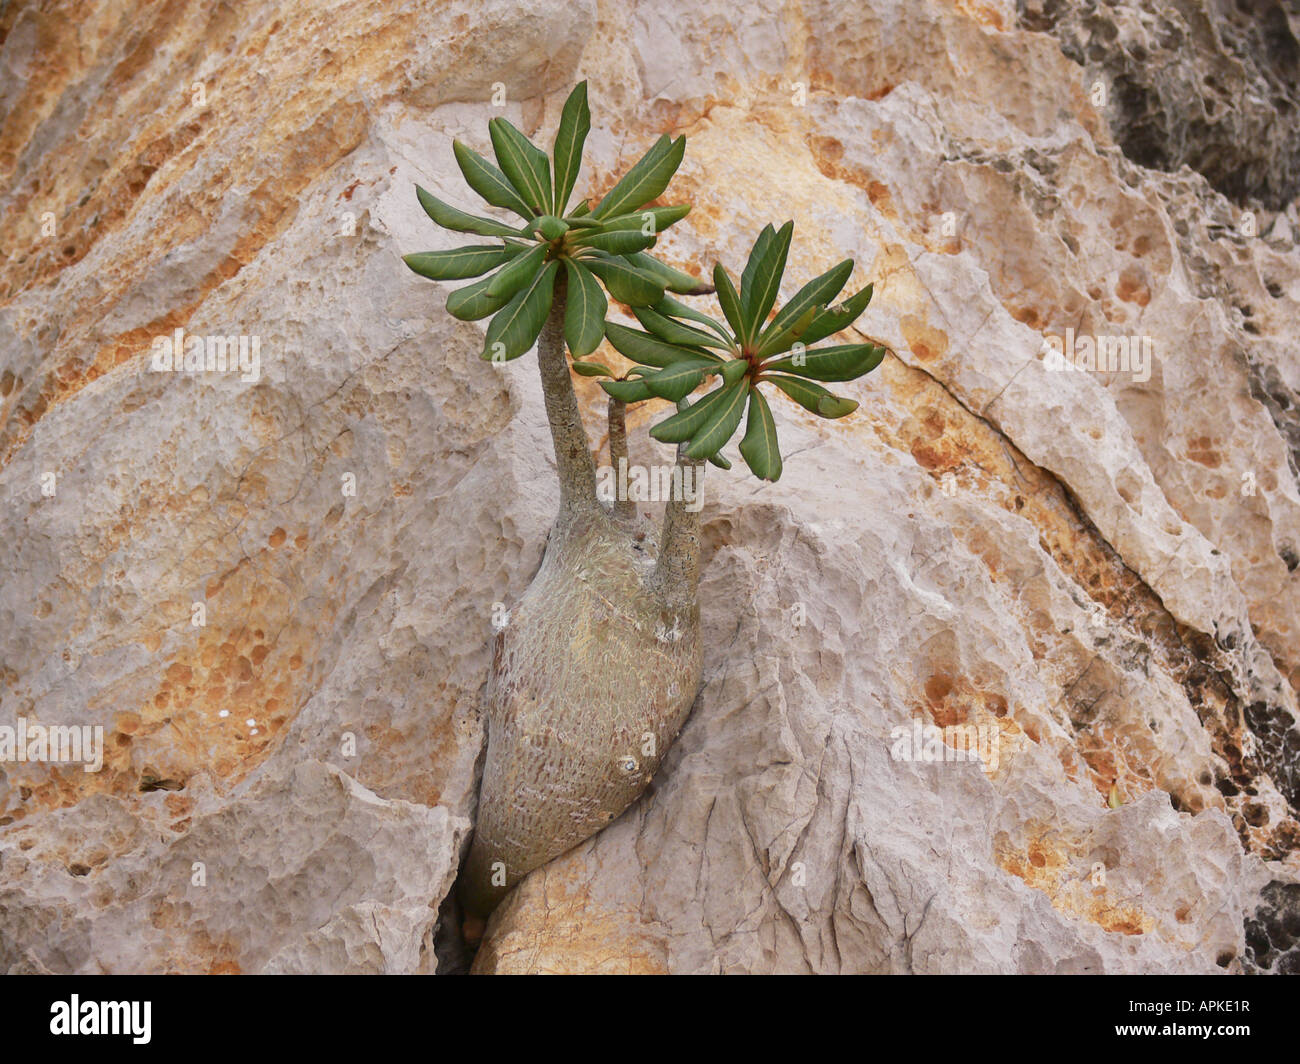 desert rose (Adenium obesum ssp. socotranum), single plant in a crevice, Yemen, Socotra Stock Photo